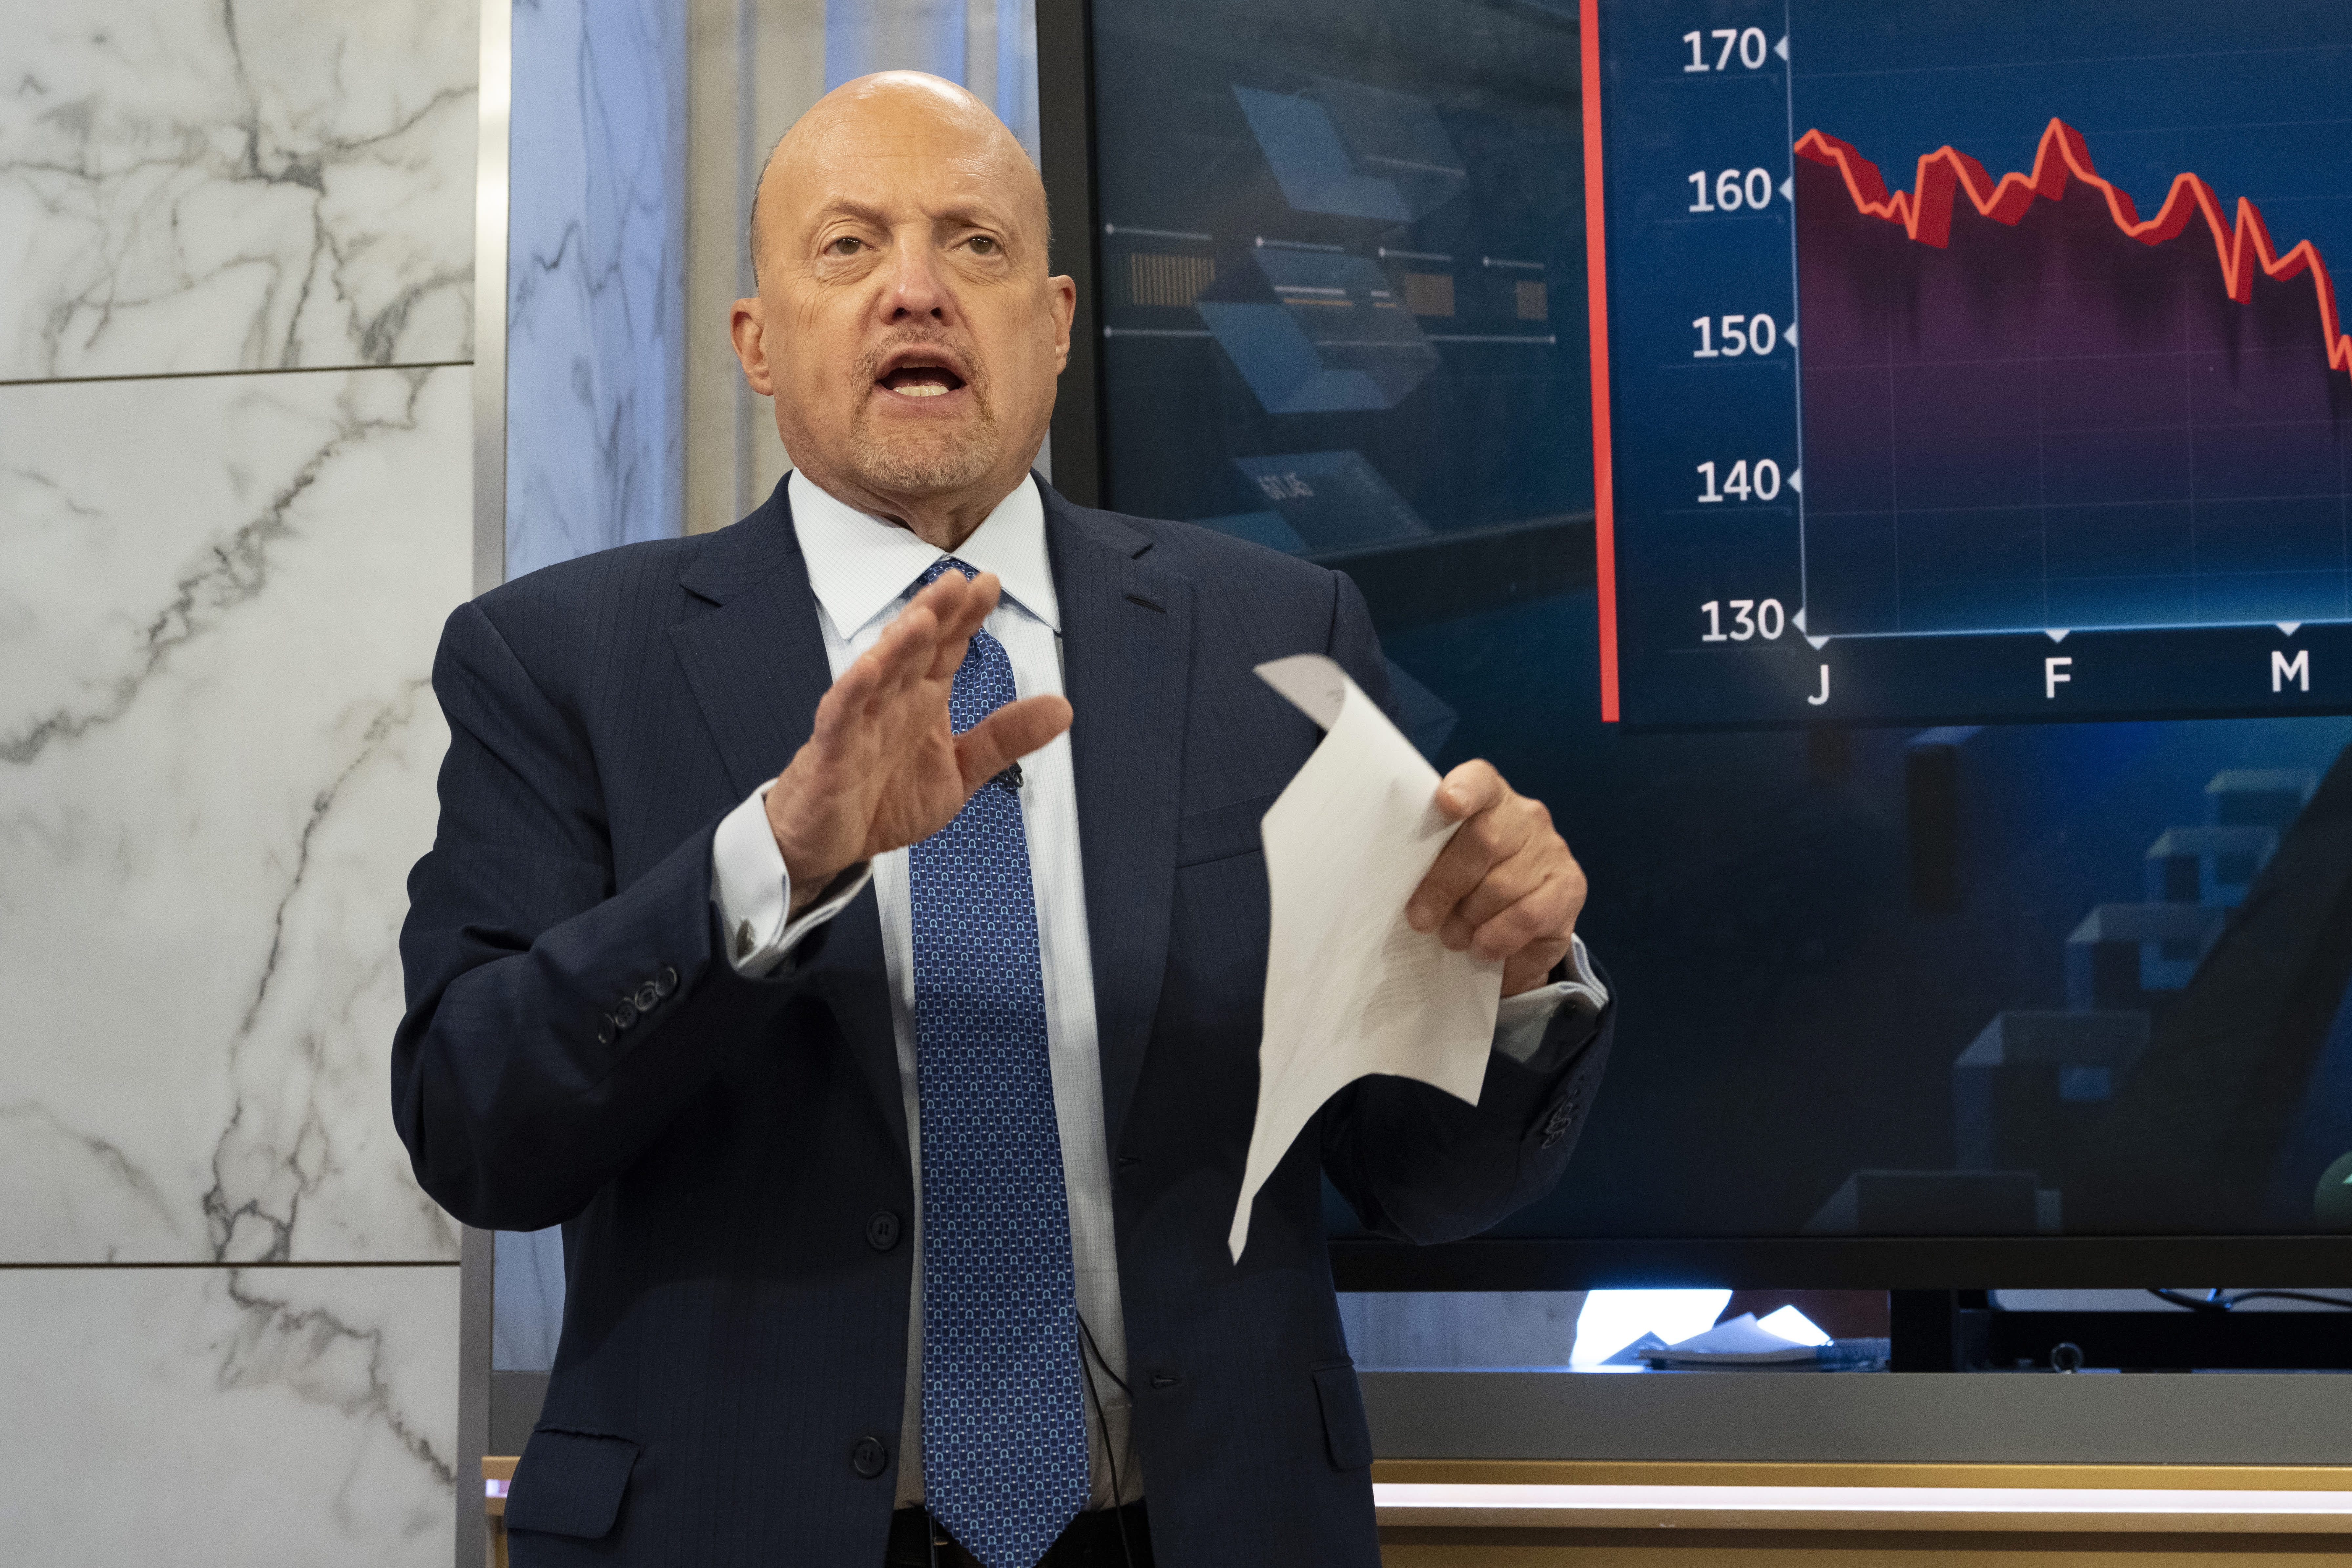 Jim Cramer's Investing Club meeting Monday: Fed update, oil stocks, Disney